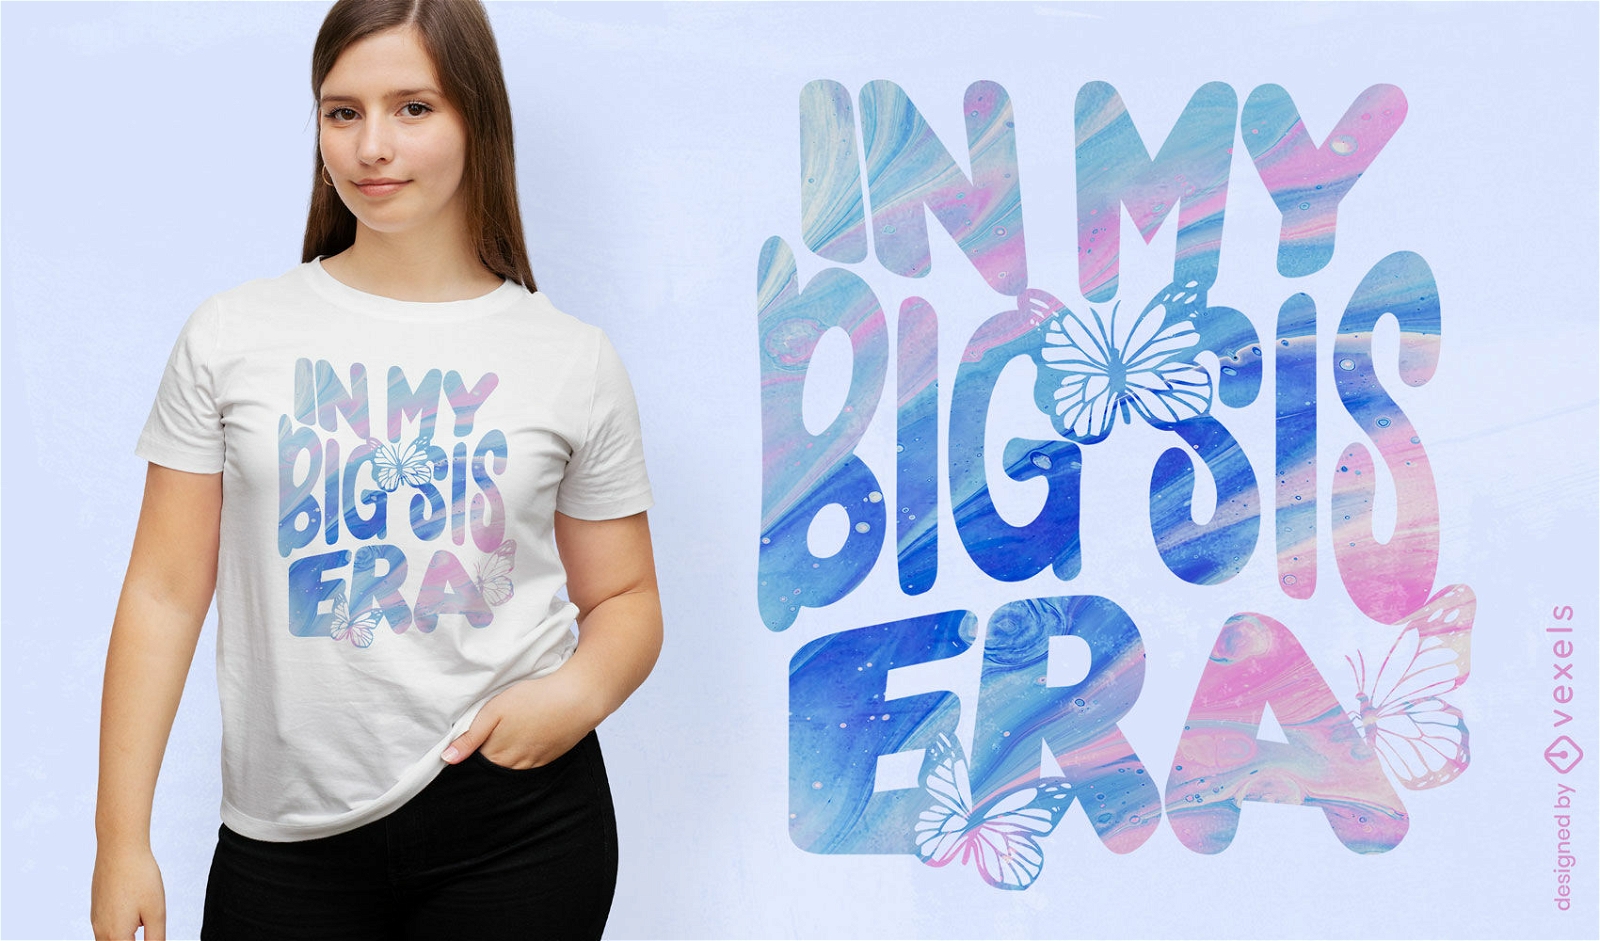 Big sis era t-shirt design